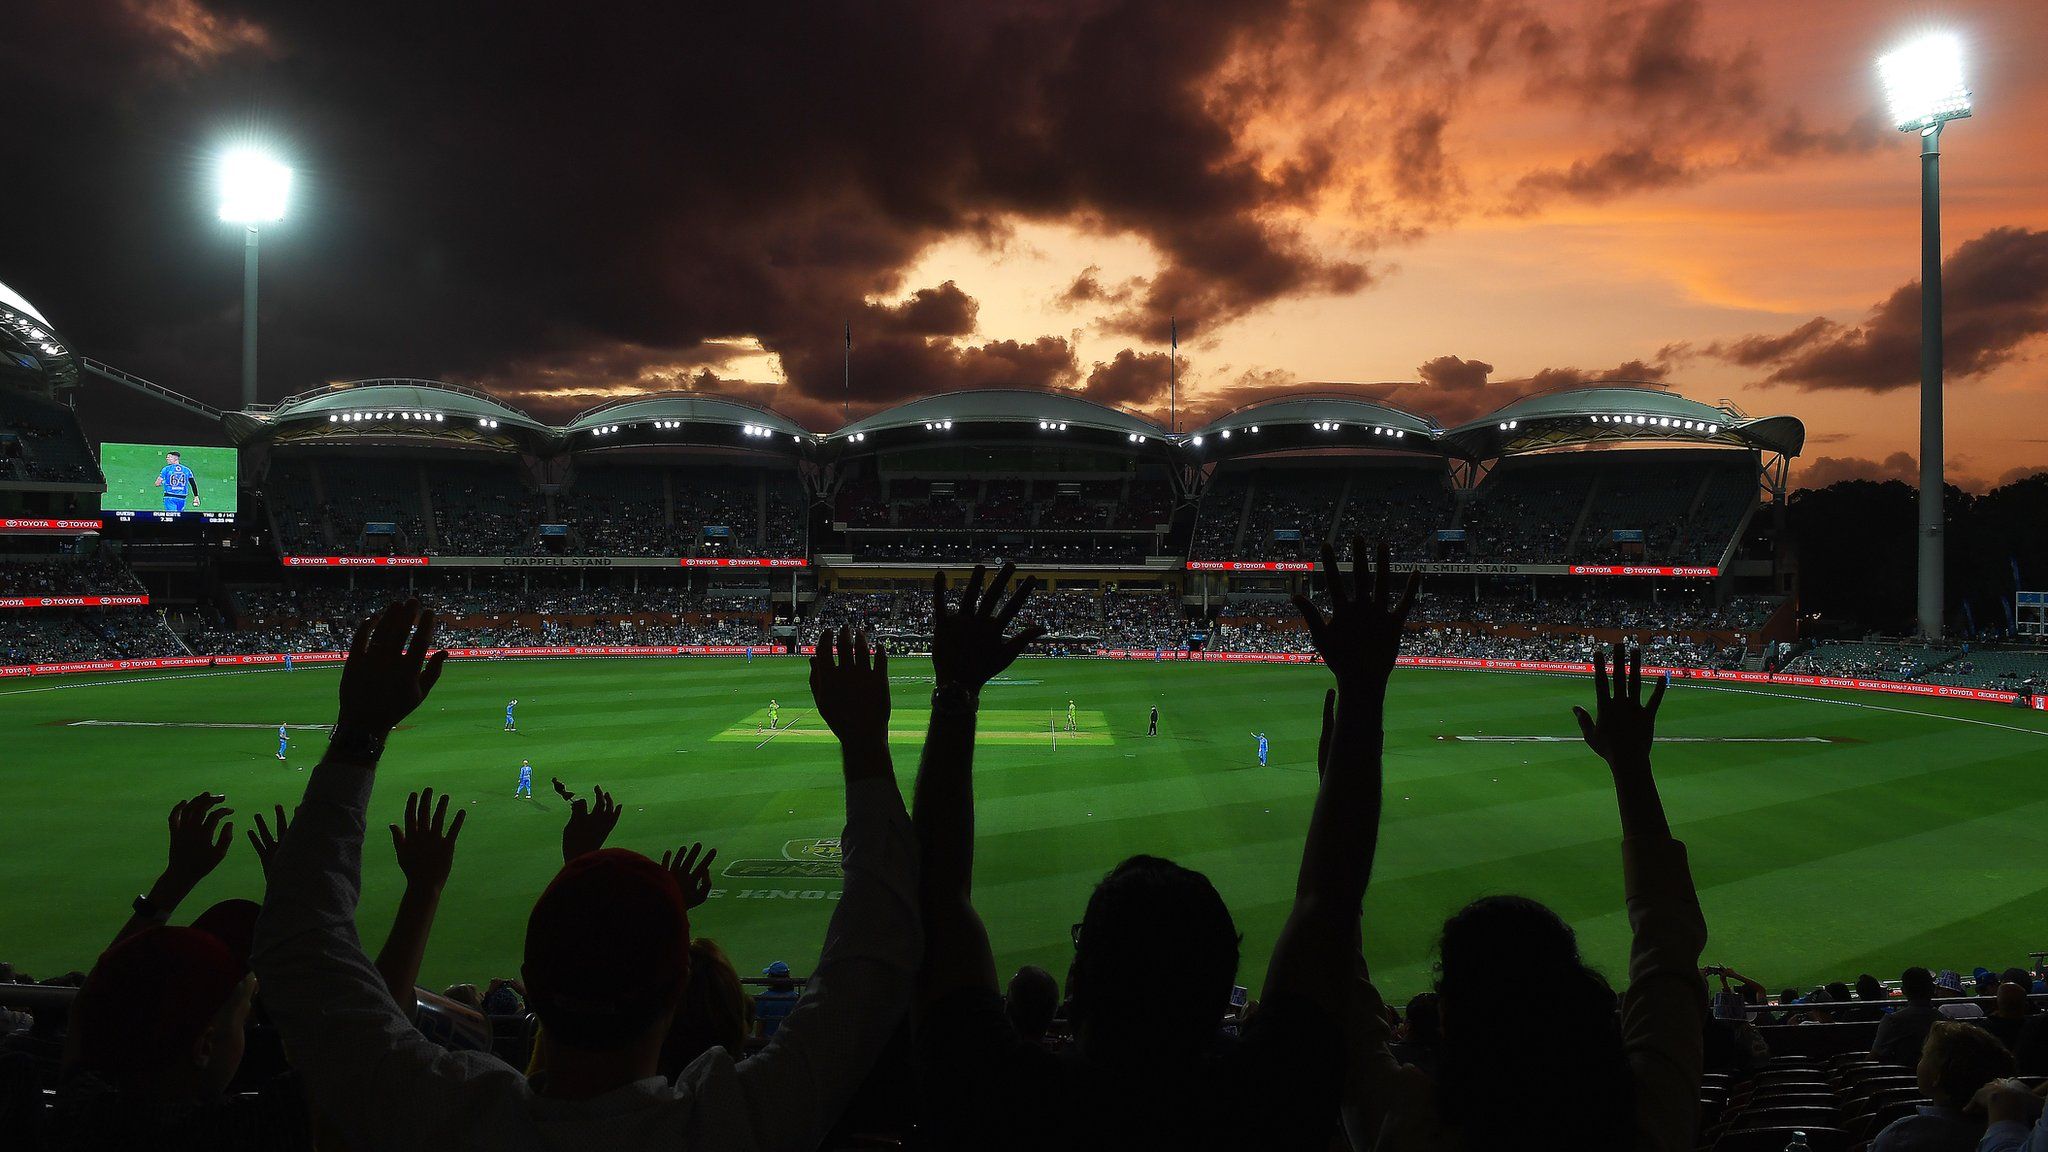 The Sydney Cricket Ground at night